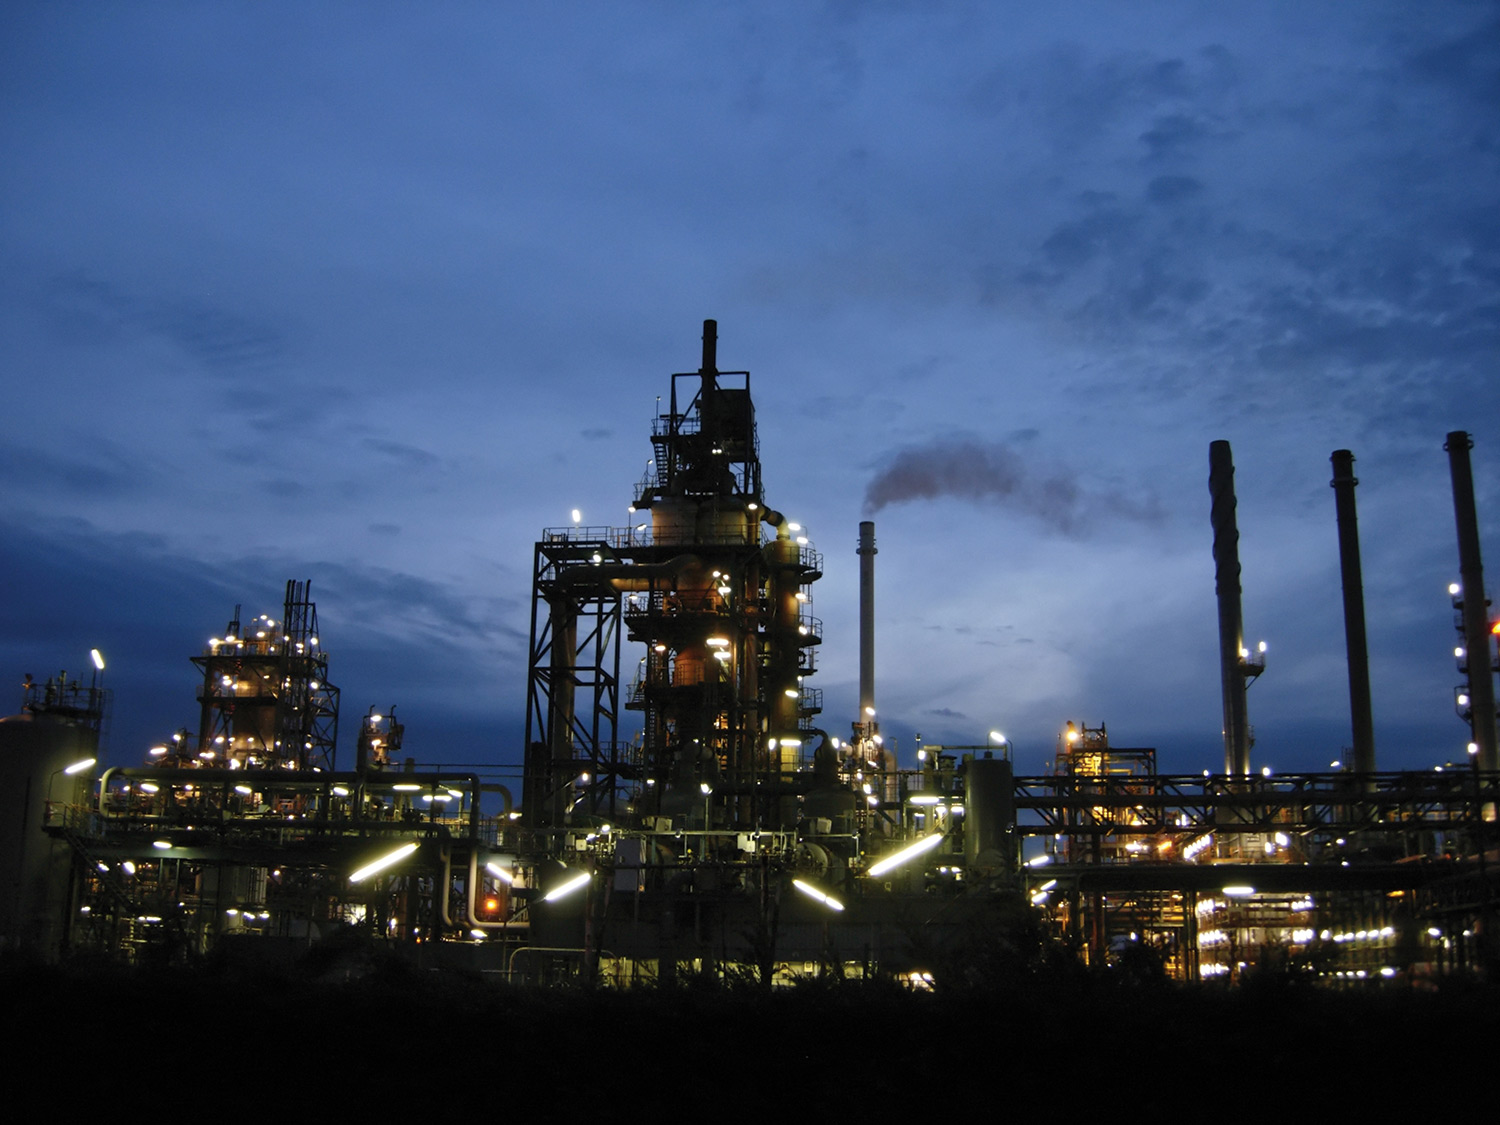 saskatchewan-pst-eliminated-again-for-oil-gas-industry-mnp